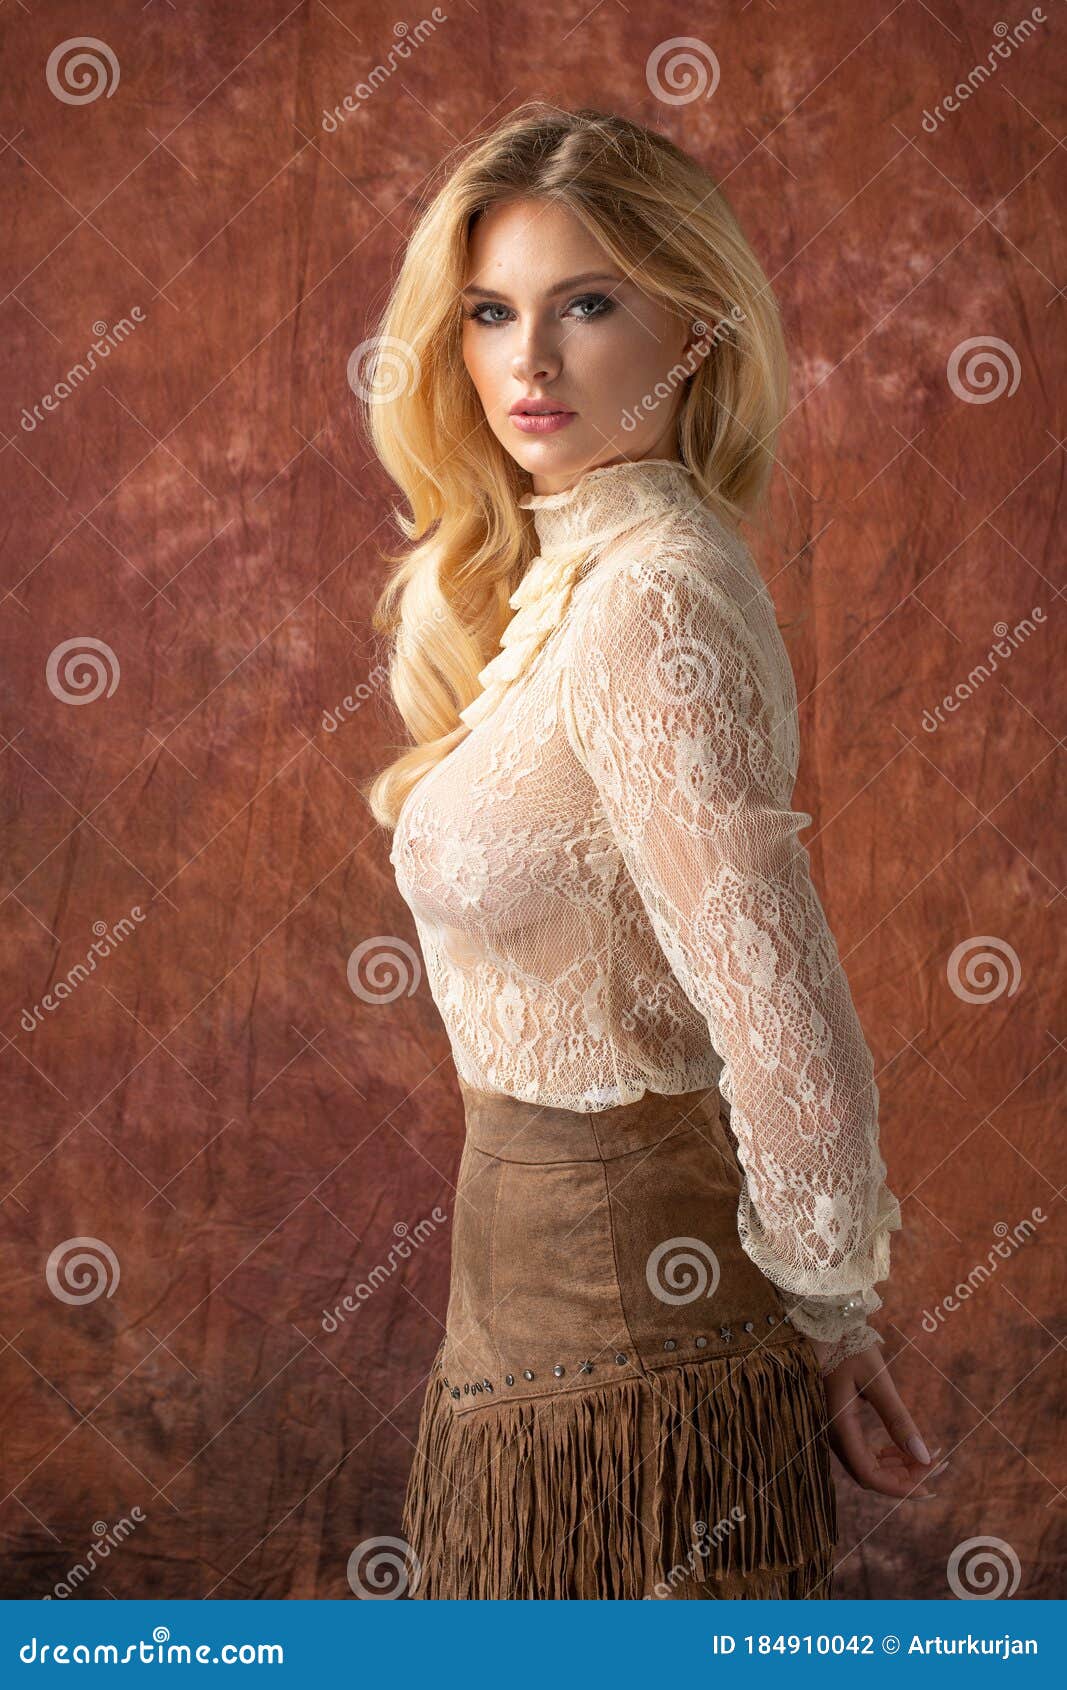 https://thumbs.dreamstime.com/z/fashion-photo-beautiful-elegant-young-woman-184910042.jpg